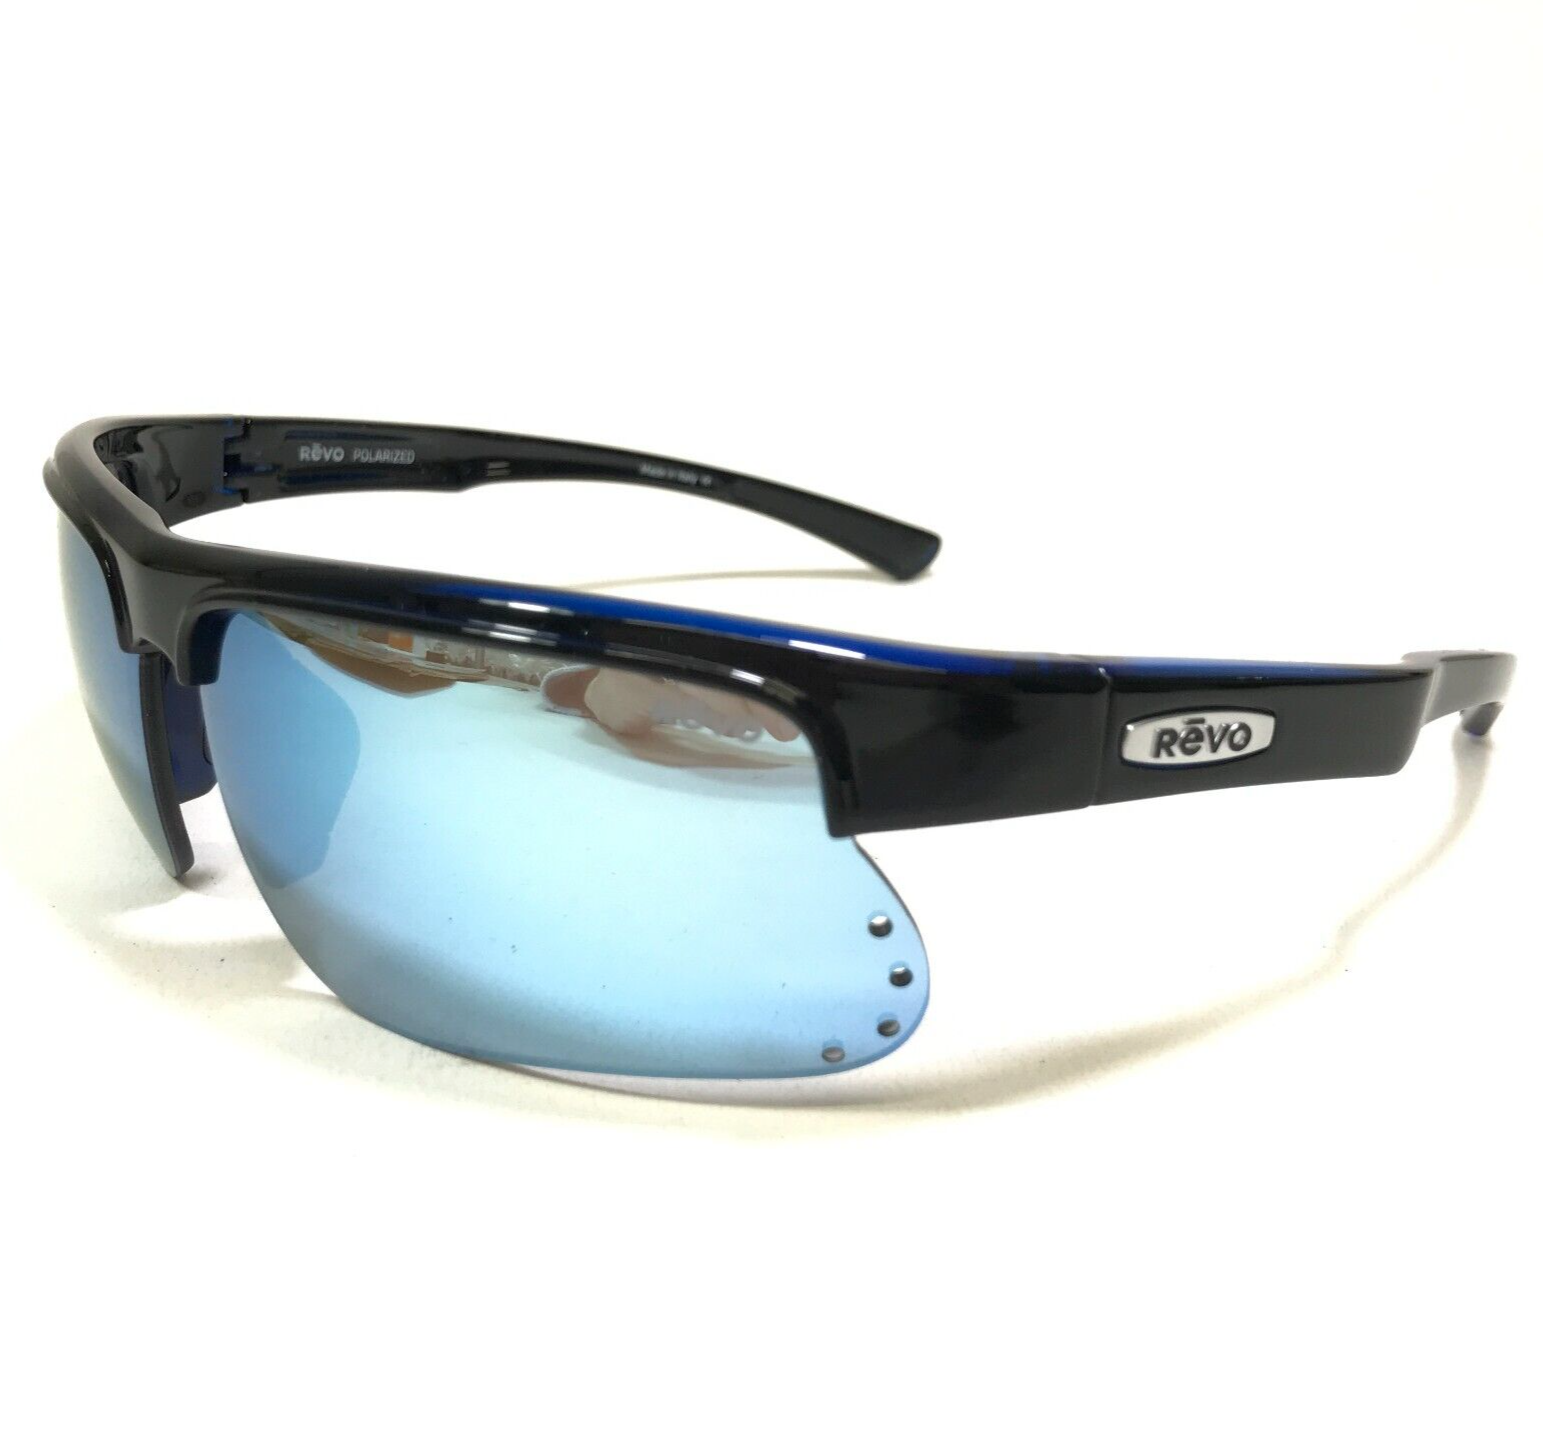 REVO Sunglasses RE1025 15 CUSP S Black Blue Wrap Frames with Mirrored Lenses - $111.98